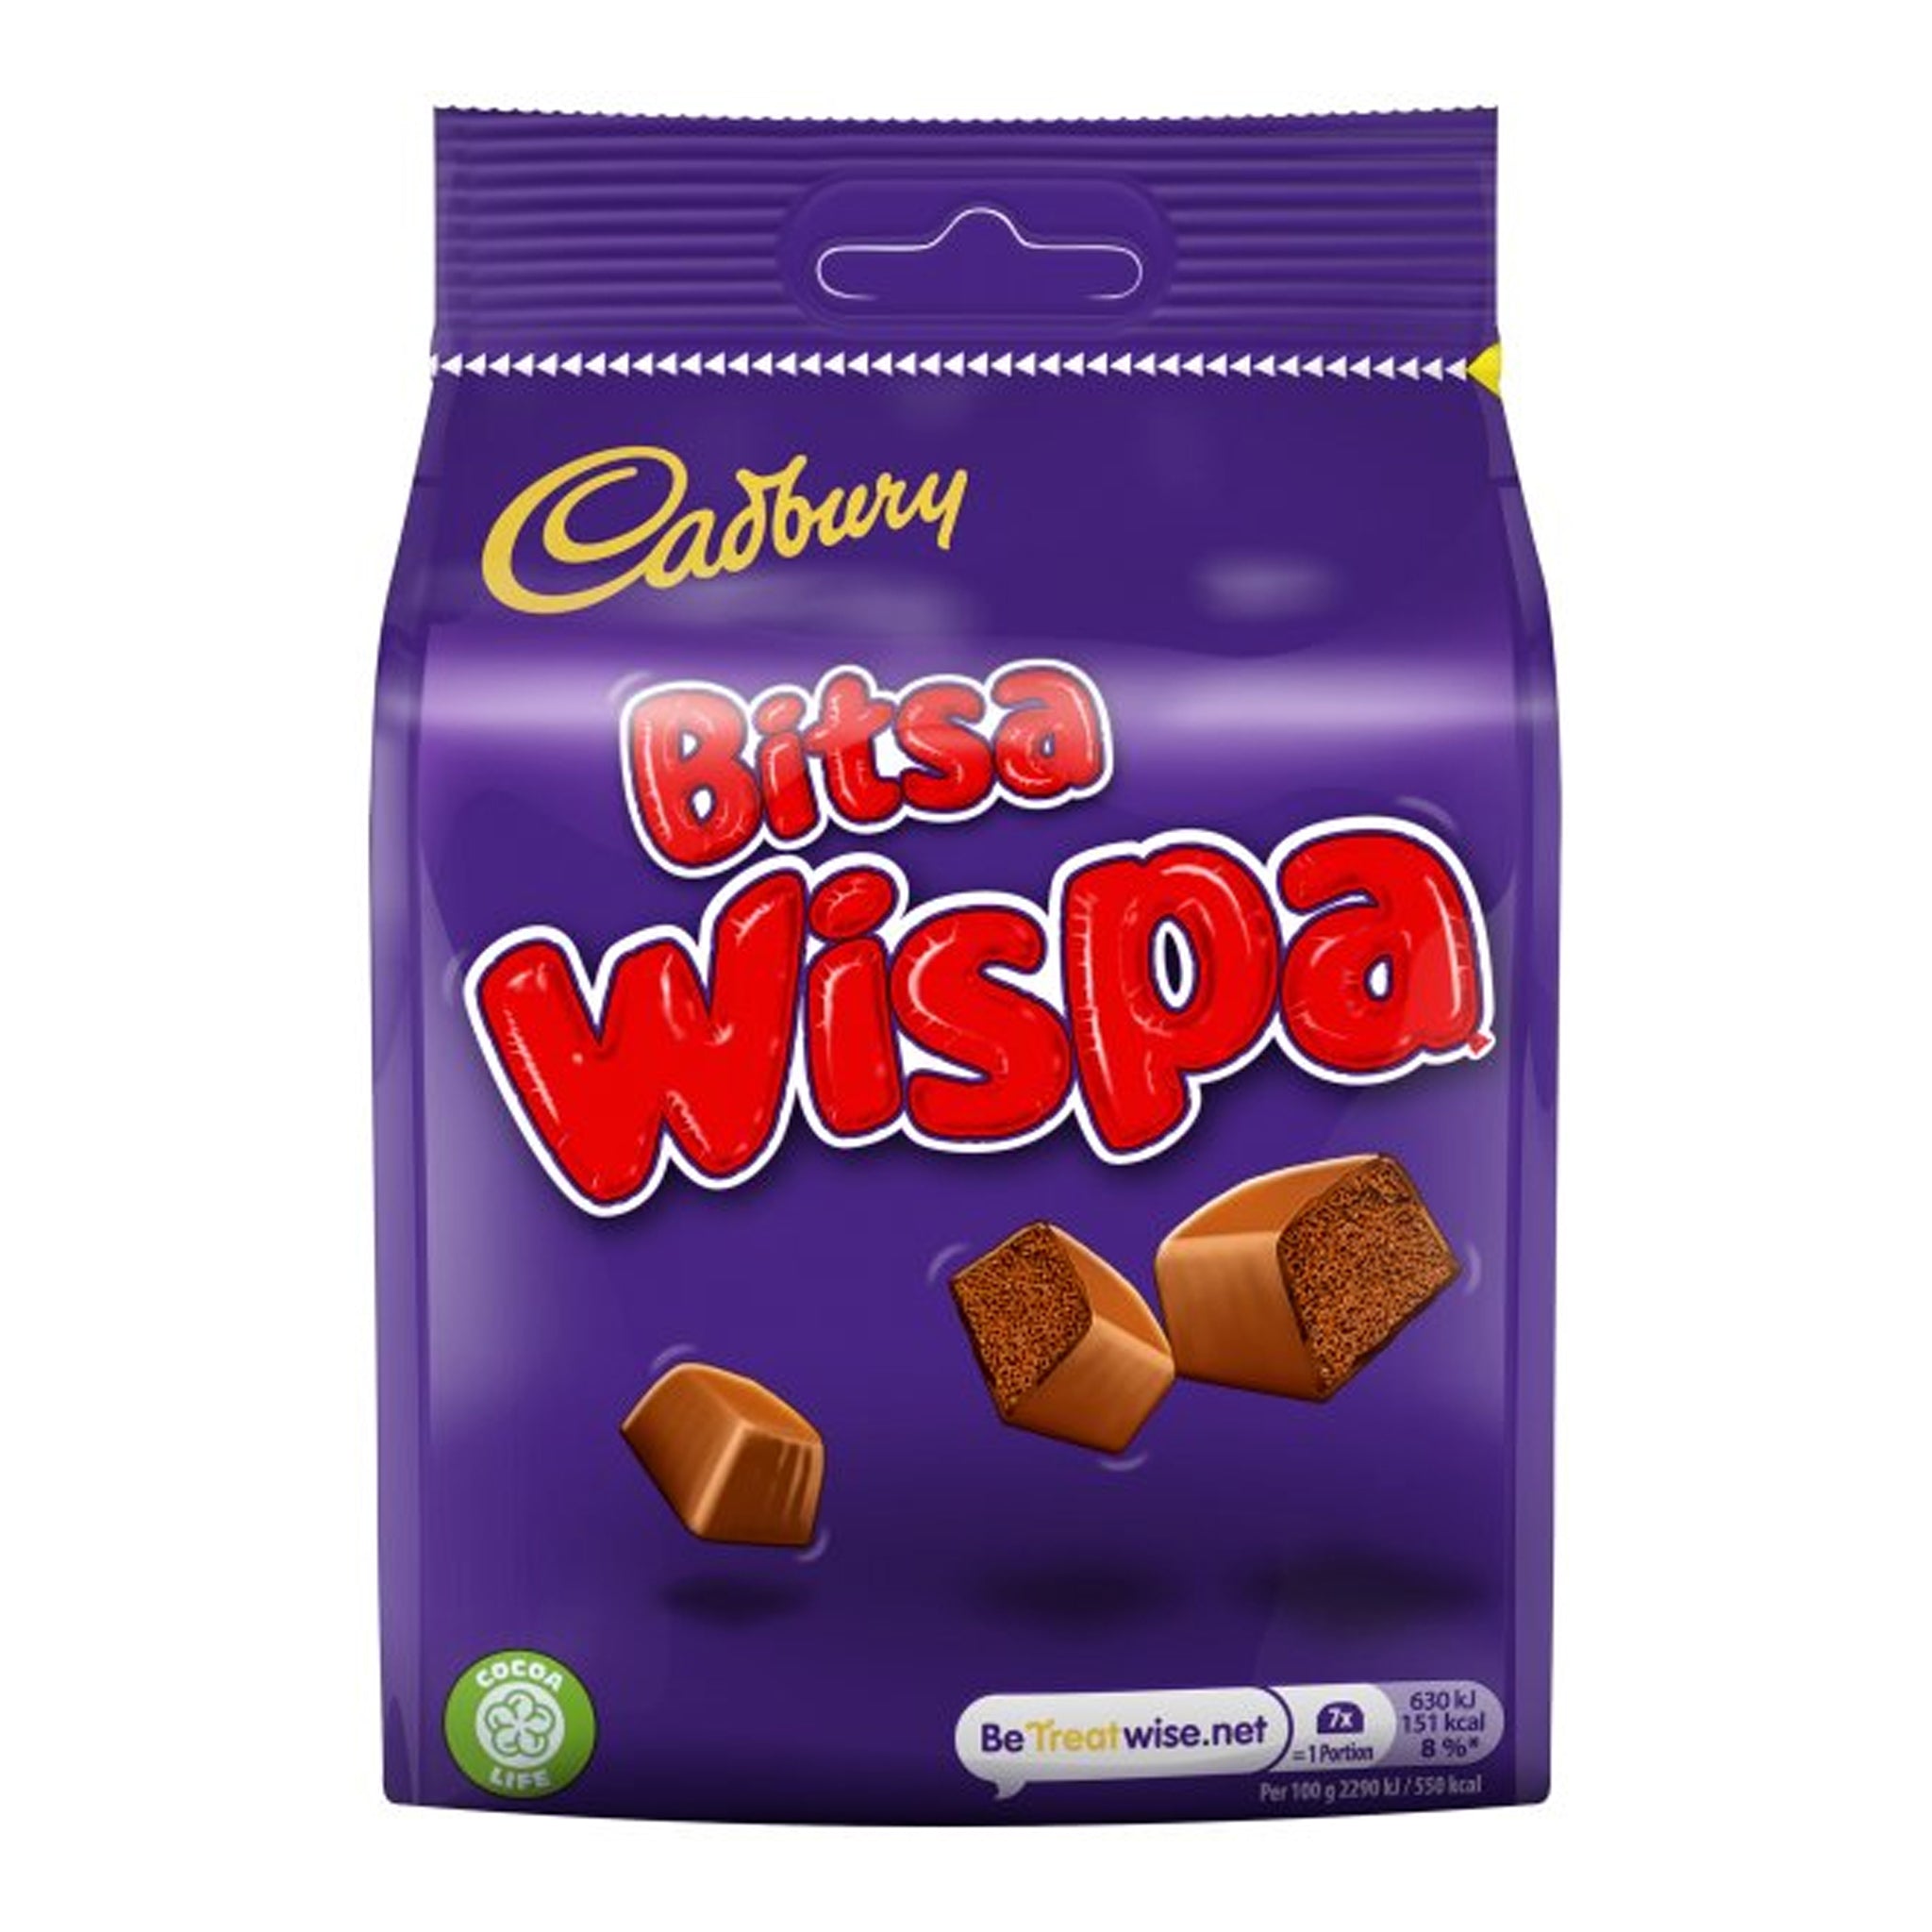 Cadbury wispa bites קדבורי ויספה נגיסים